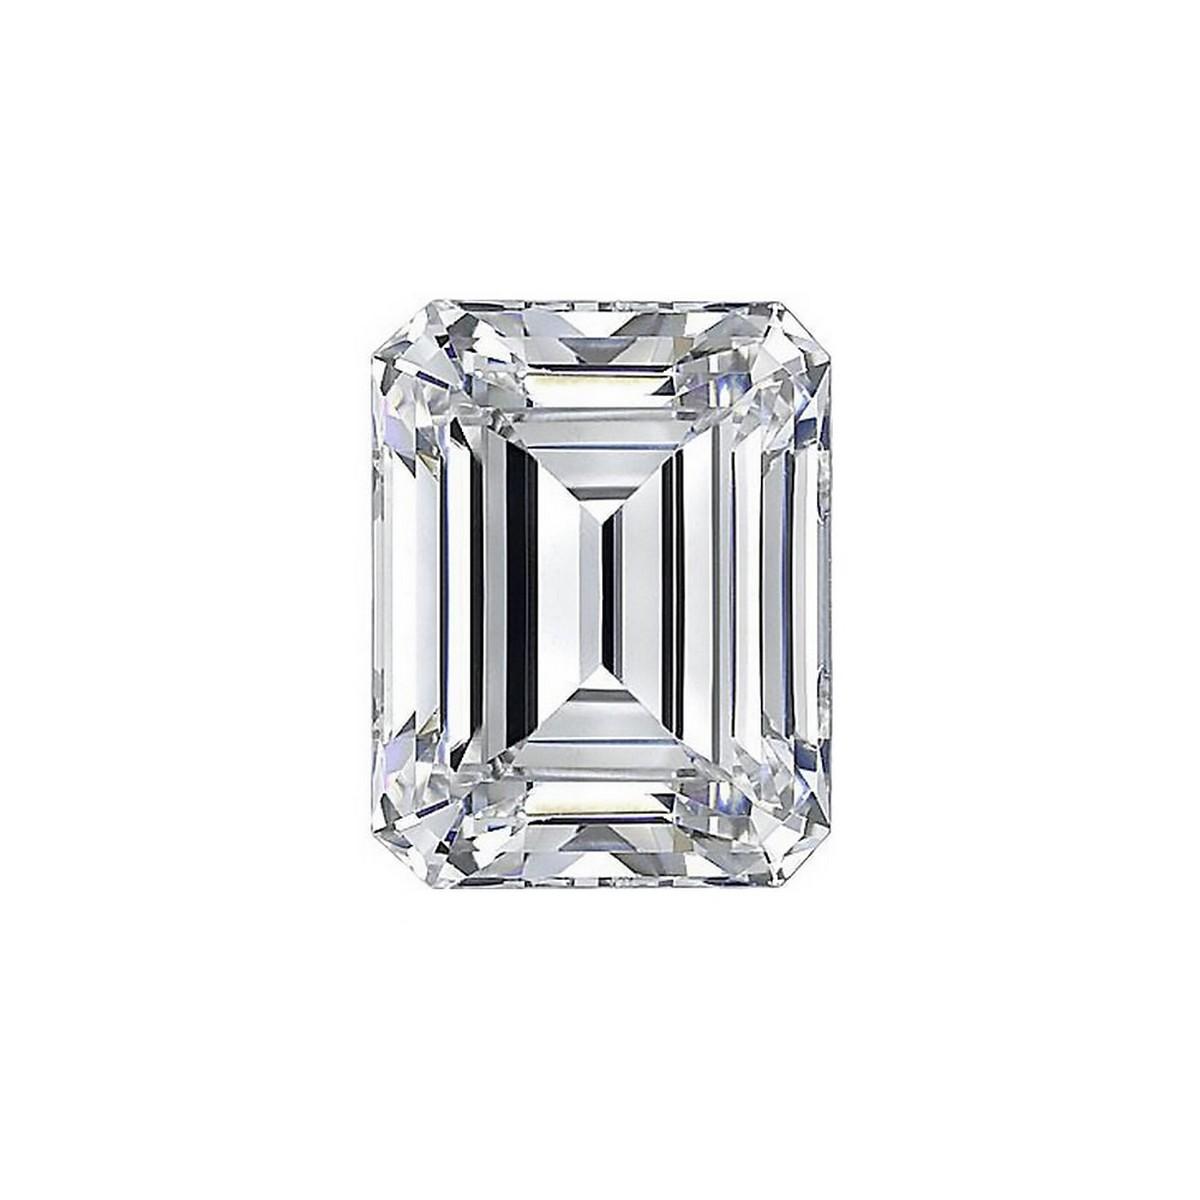 4.58 ctw. VVS2 IGI Certified Emerald Cut Loose Diamond (LAB GROWN)